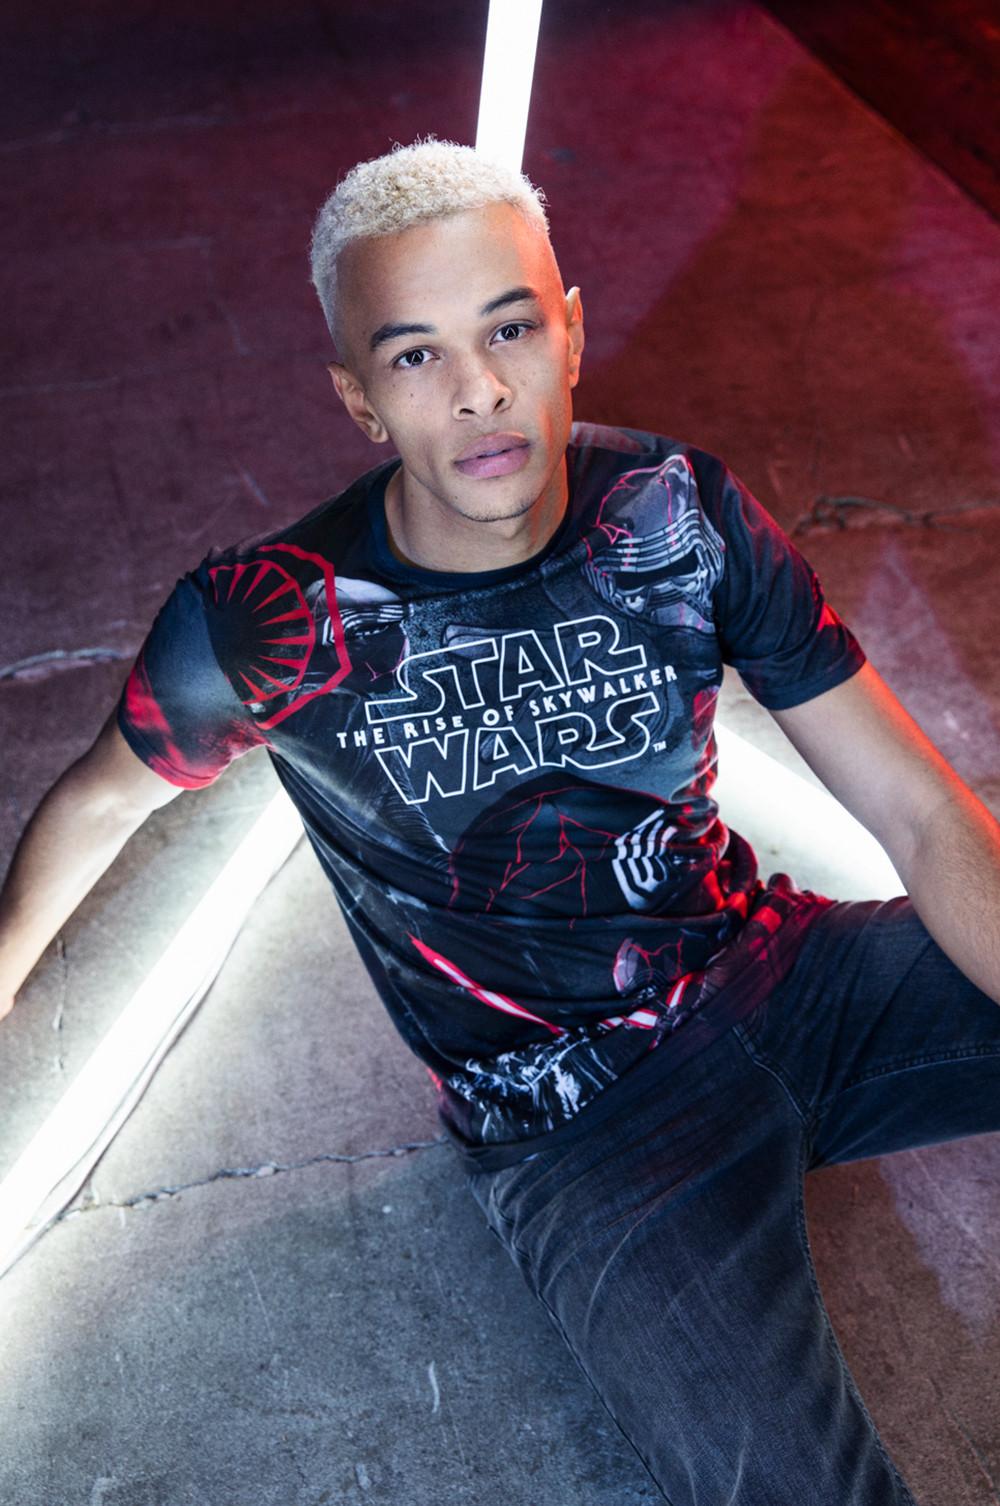 Model in black Star Wars t-shirt